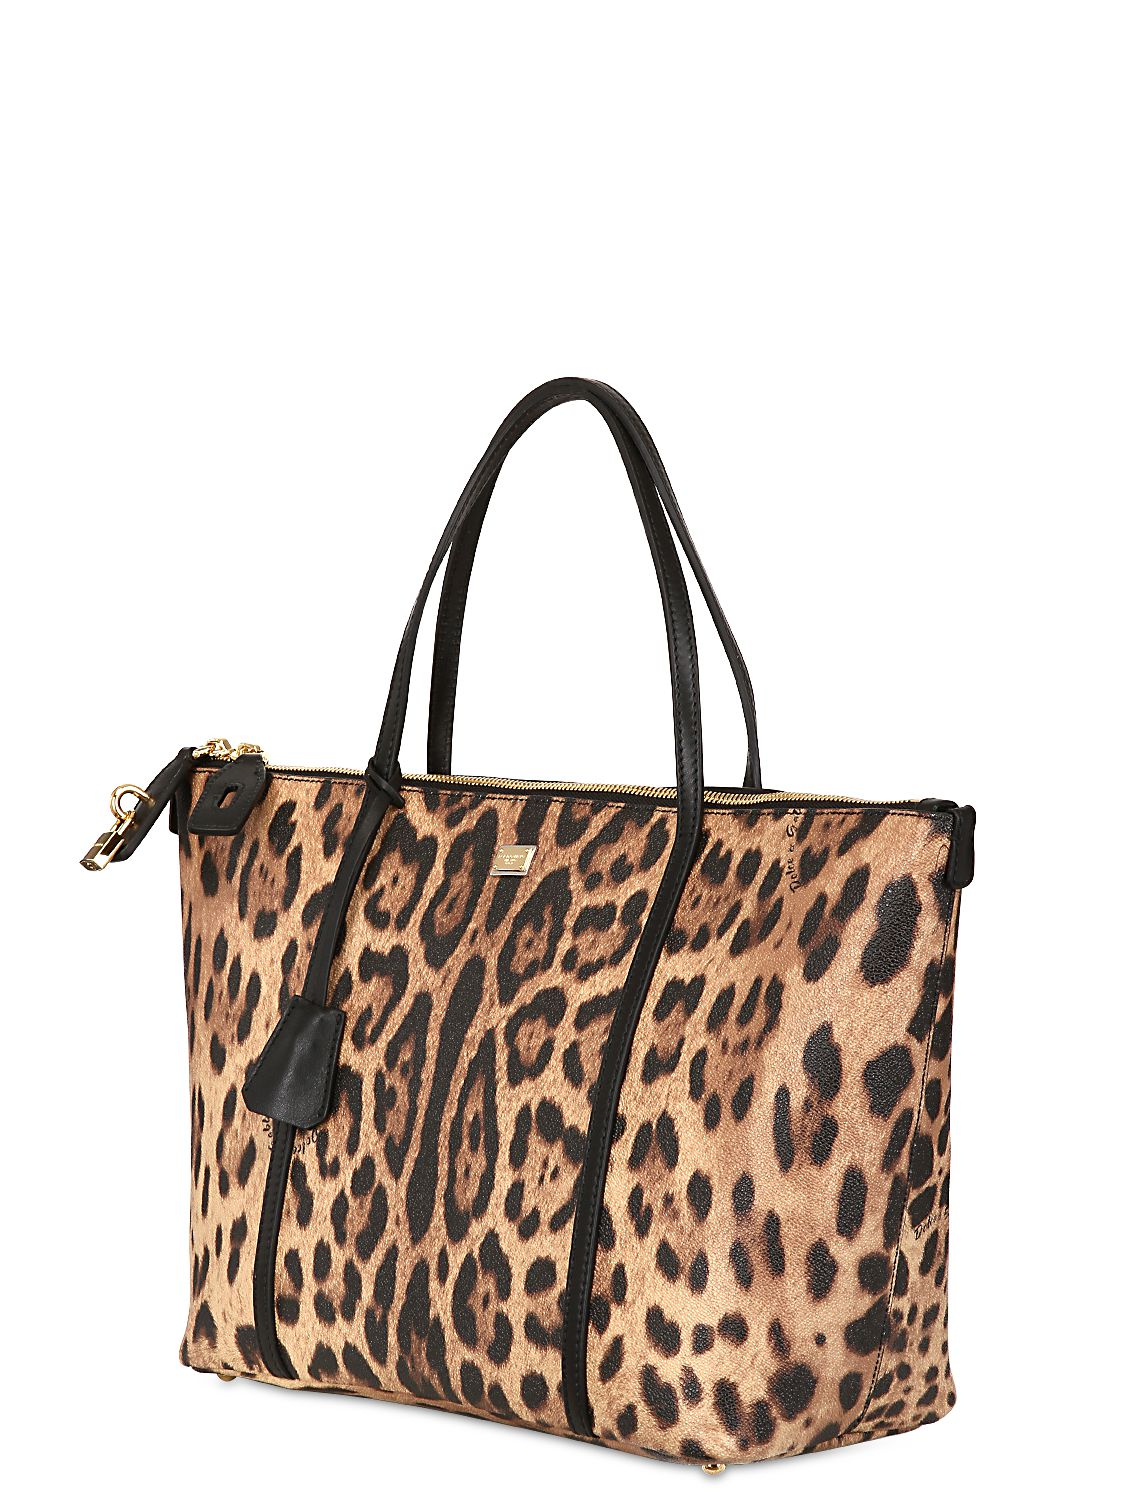 Lyst - Dolce & Gabbana Miss Escape Leopard Print Tote Bag